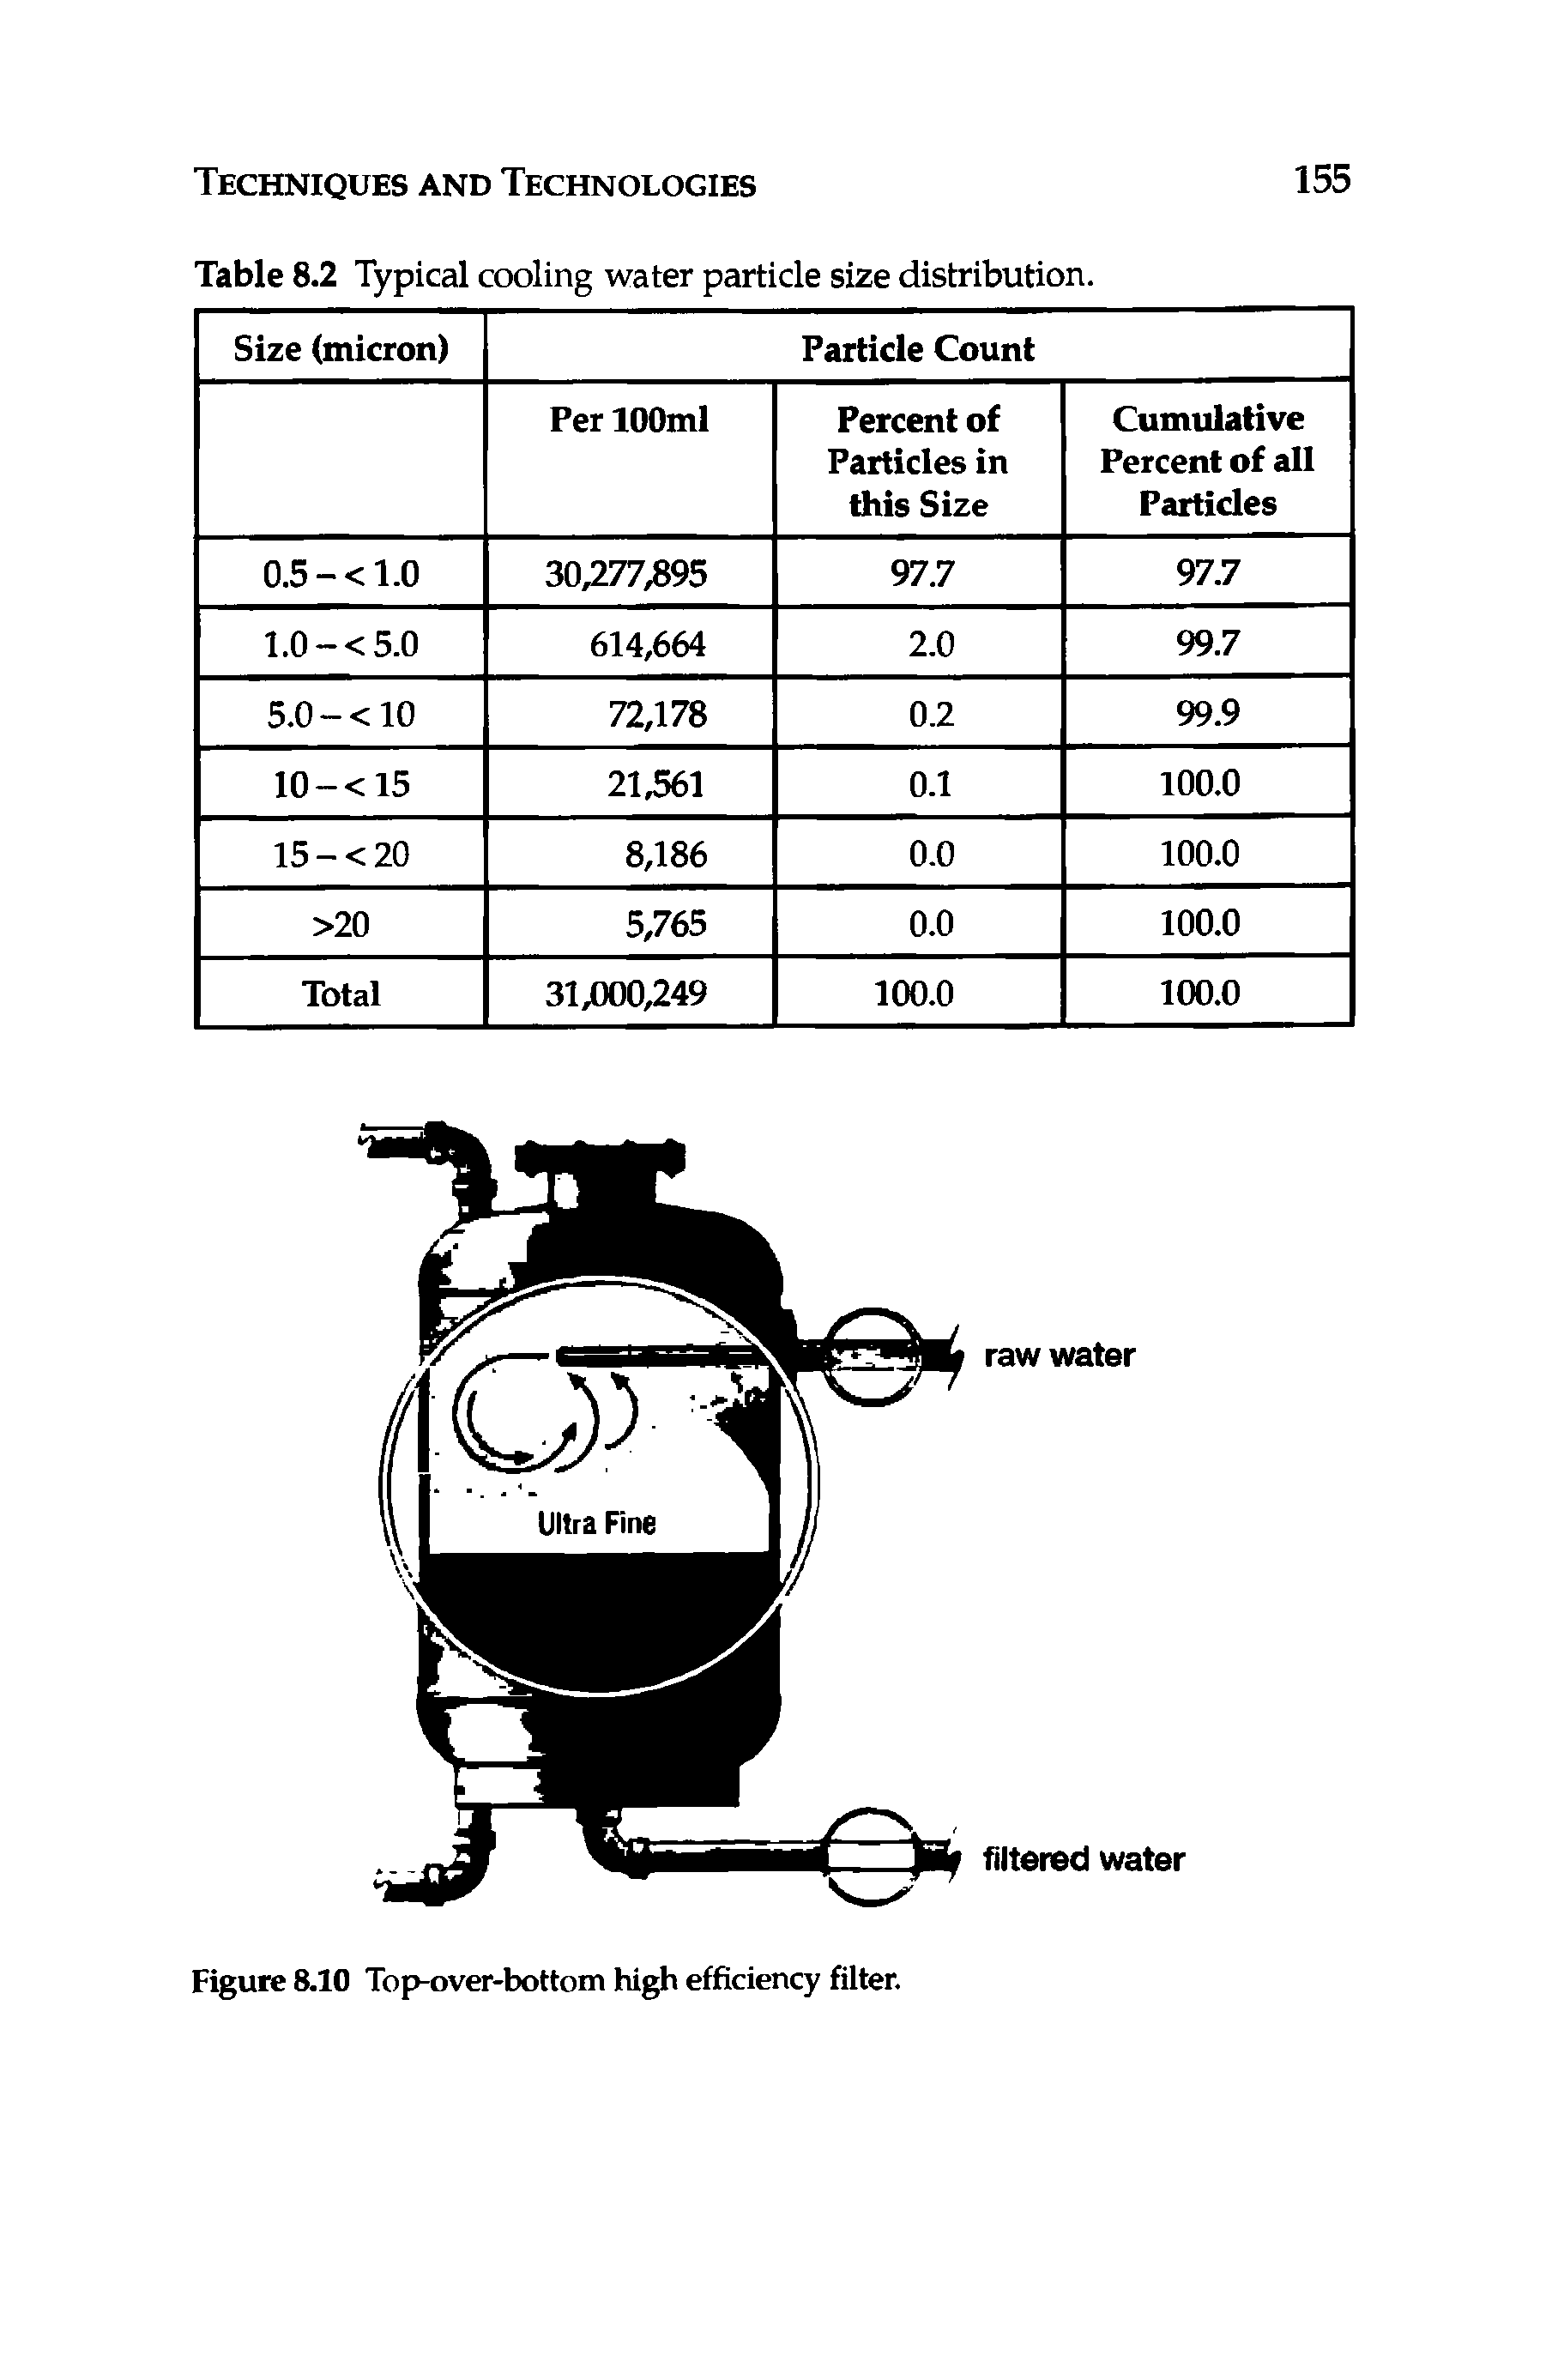 Figure 8.10 Top-over-bottom high efficiency filter.